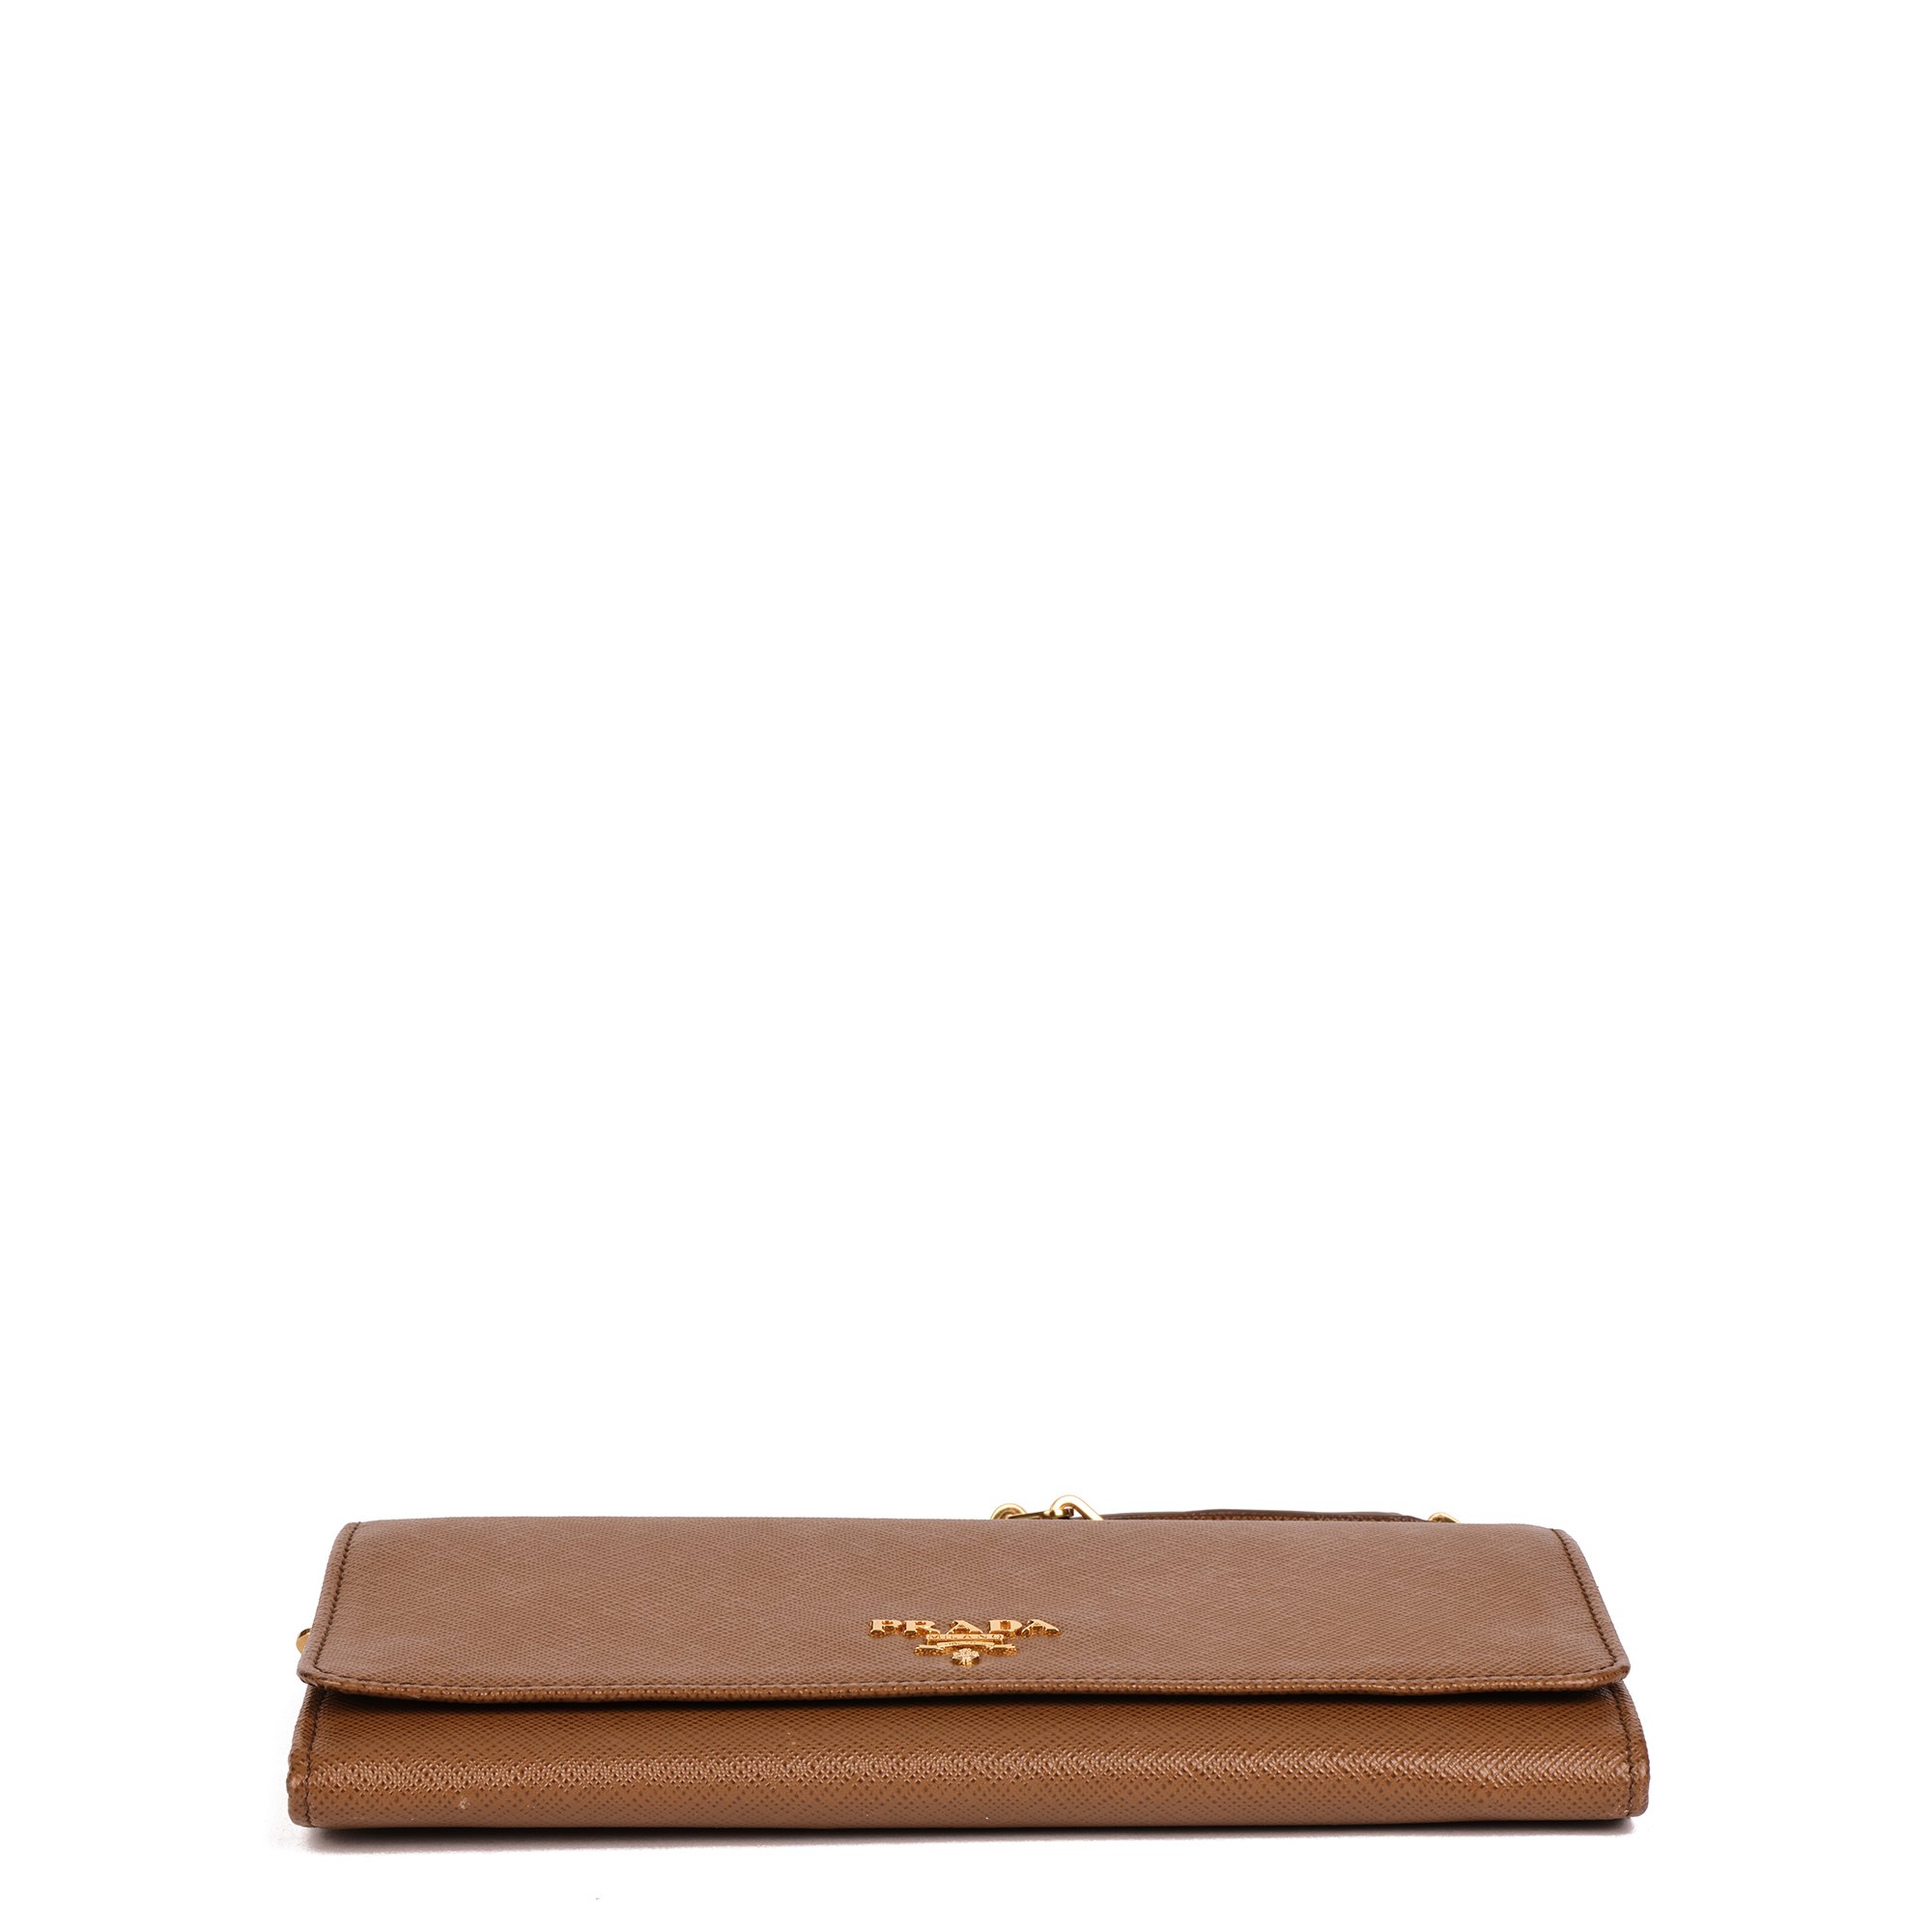 Prada Cannella Brown Saffiano Leather Wallet-on-Chain WOC